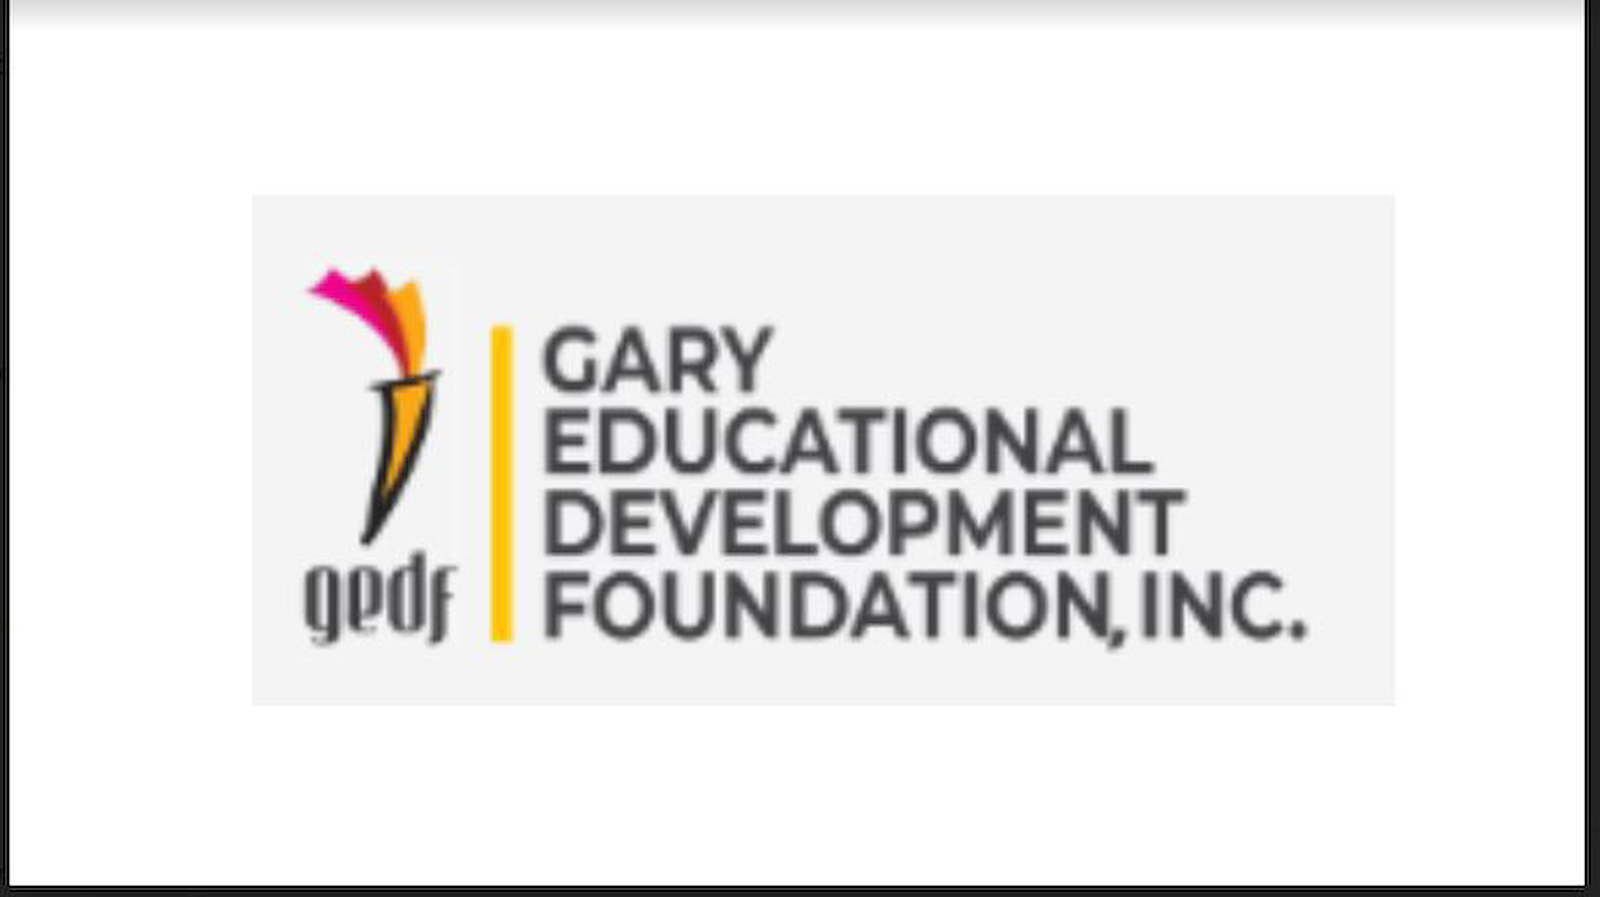 Gary Educational Development Foundation